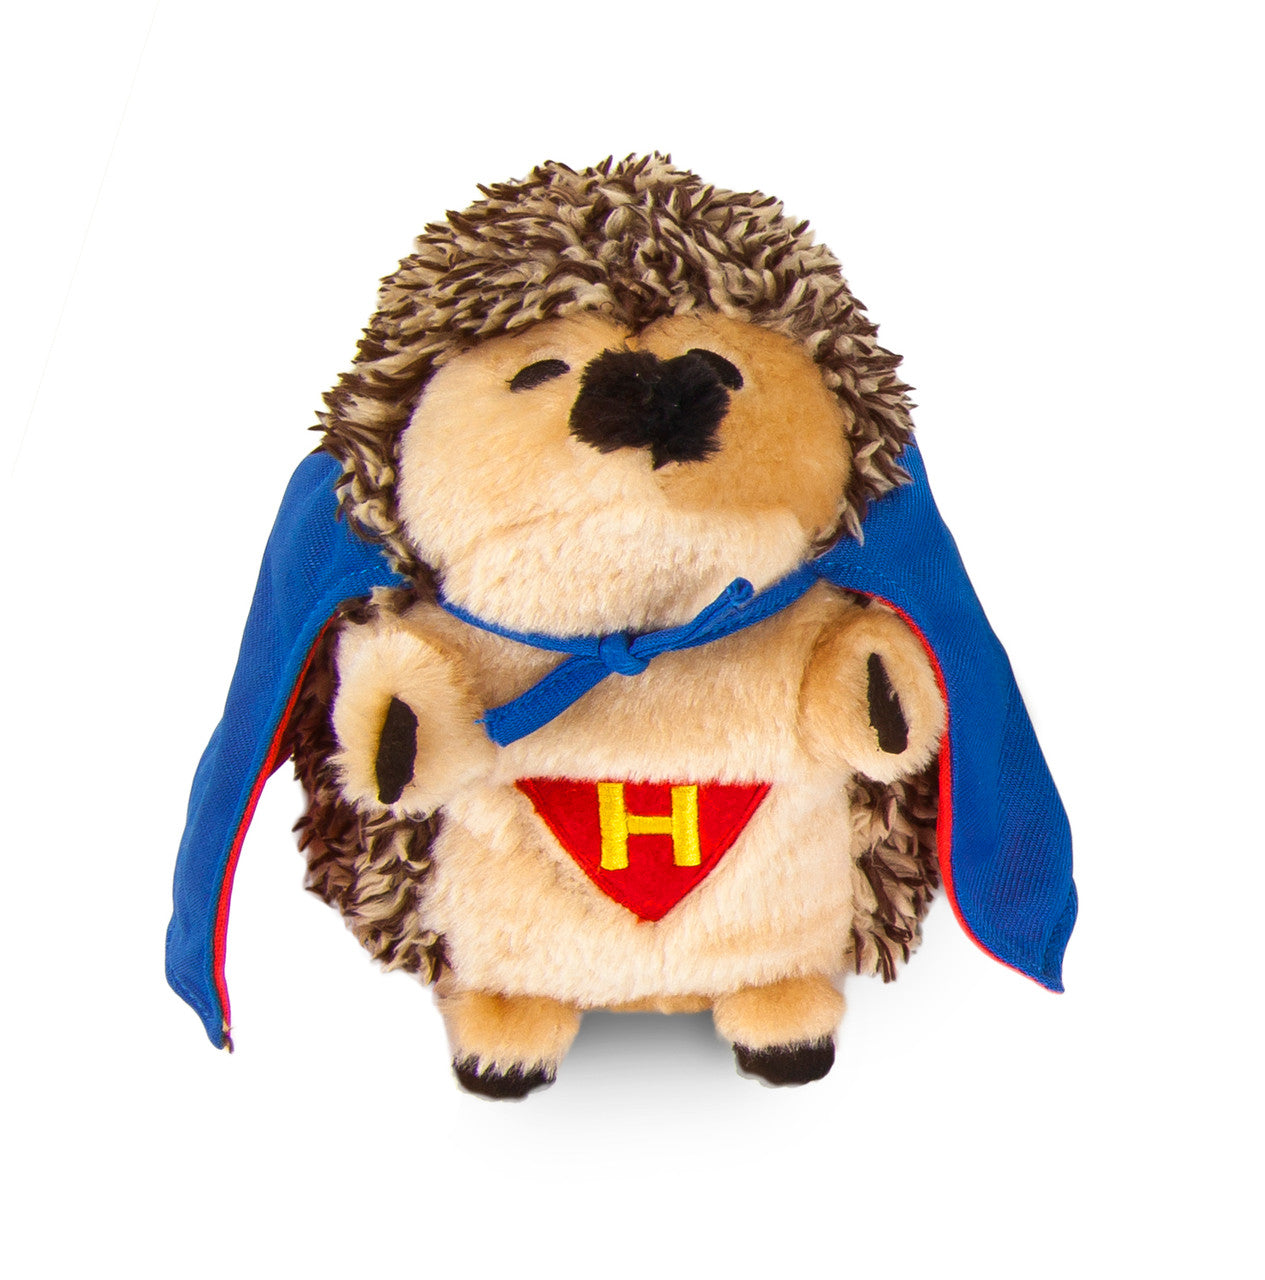 ZOOBILEE Super Hero Heggies Plush Dog Toy Multi-Color One Size